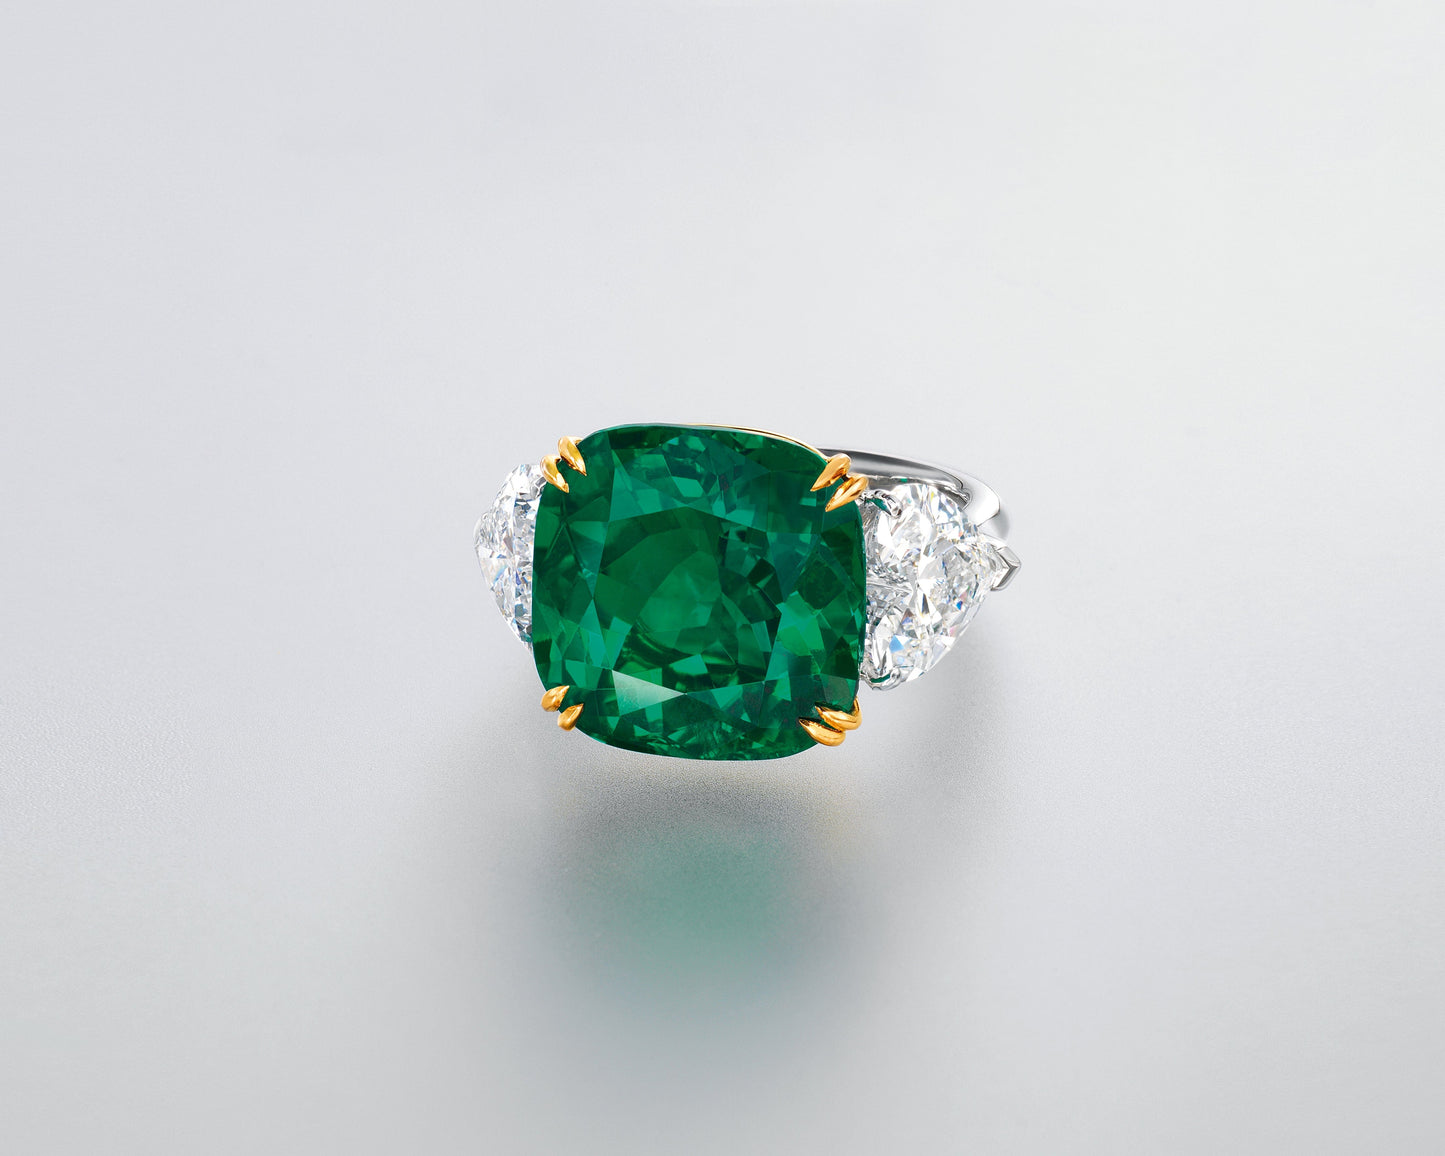 13.15 carat Cushion Cut Colombian Emerald Ring